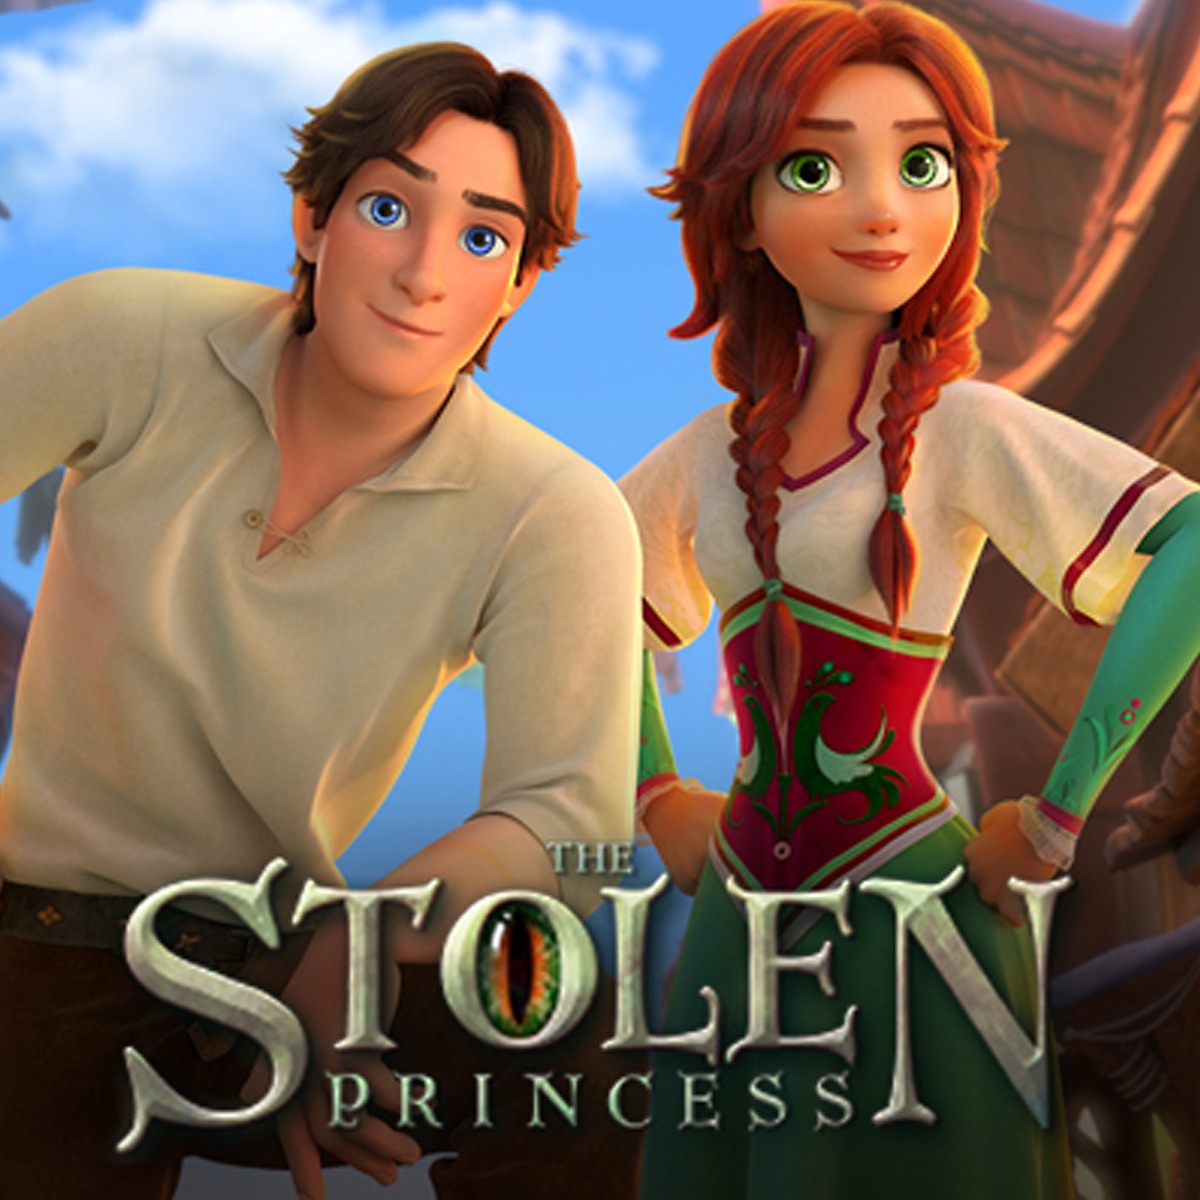 Secretstars Youngtube Animationthe Stolen Princess The Stolen